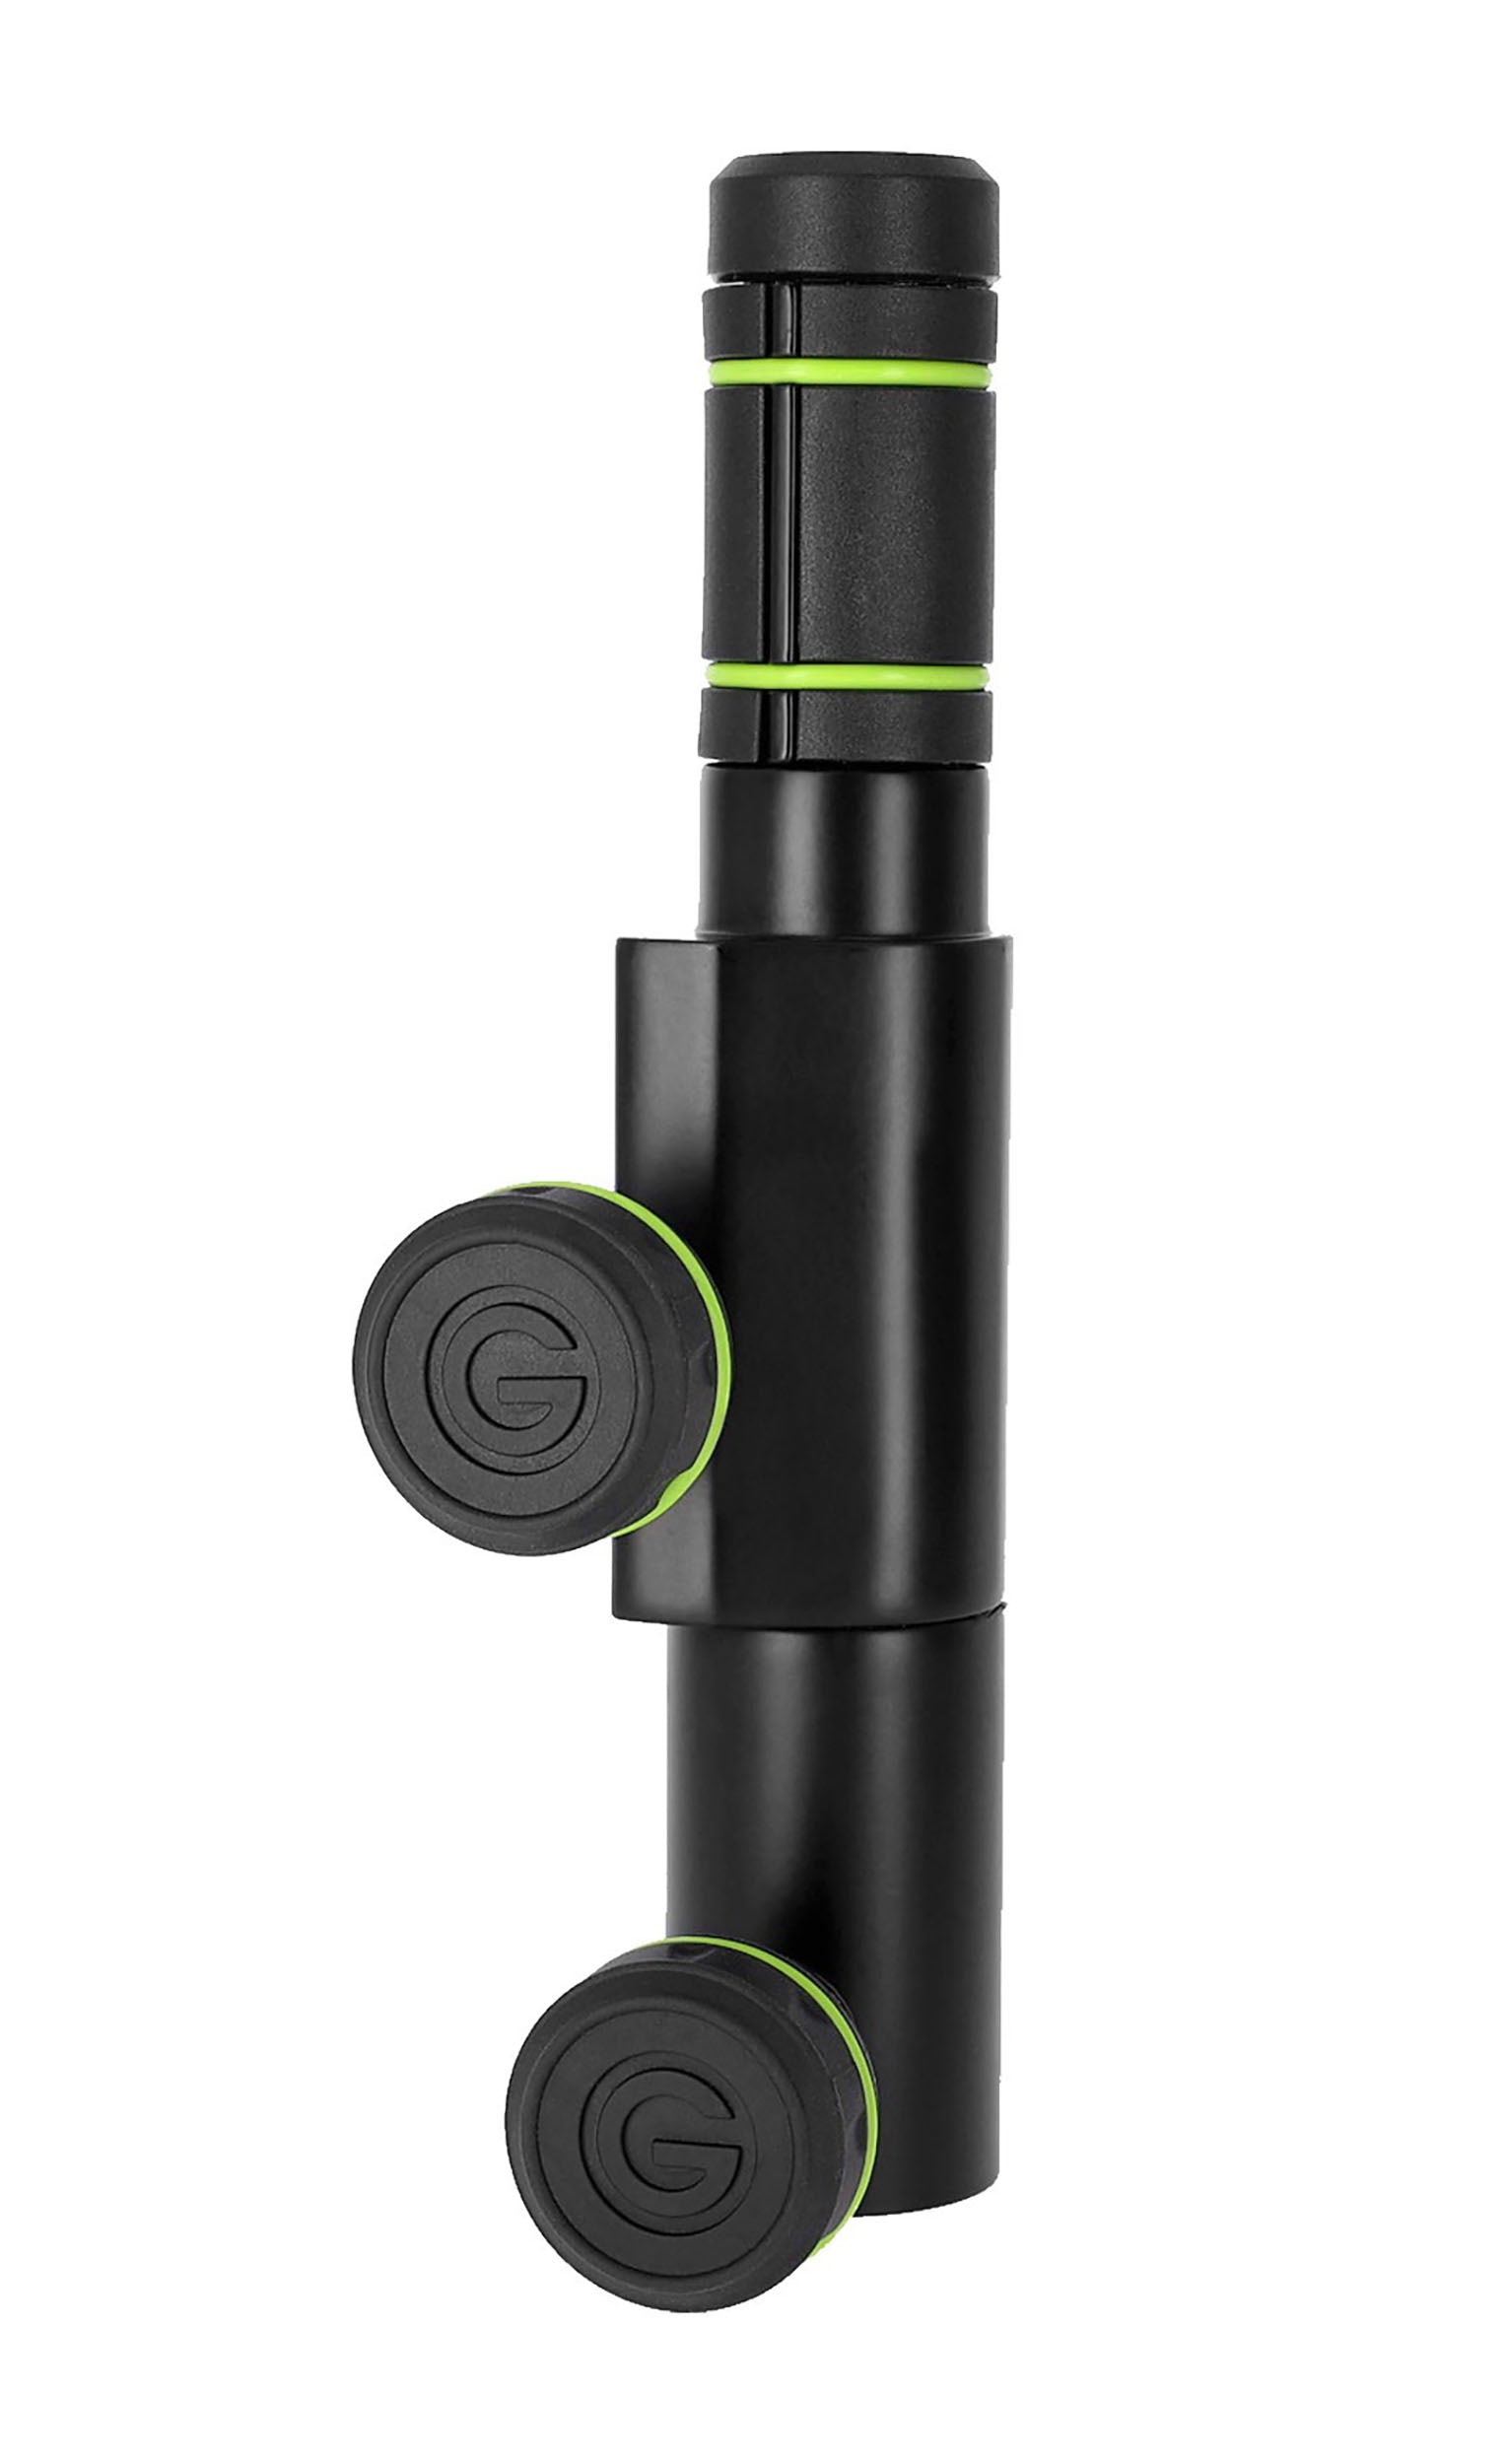 Gravity GR-GSAGRIPLOCK, Grip Lock Adapter Sleeve for Speaker Stands by Gravity